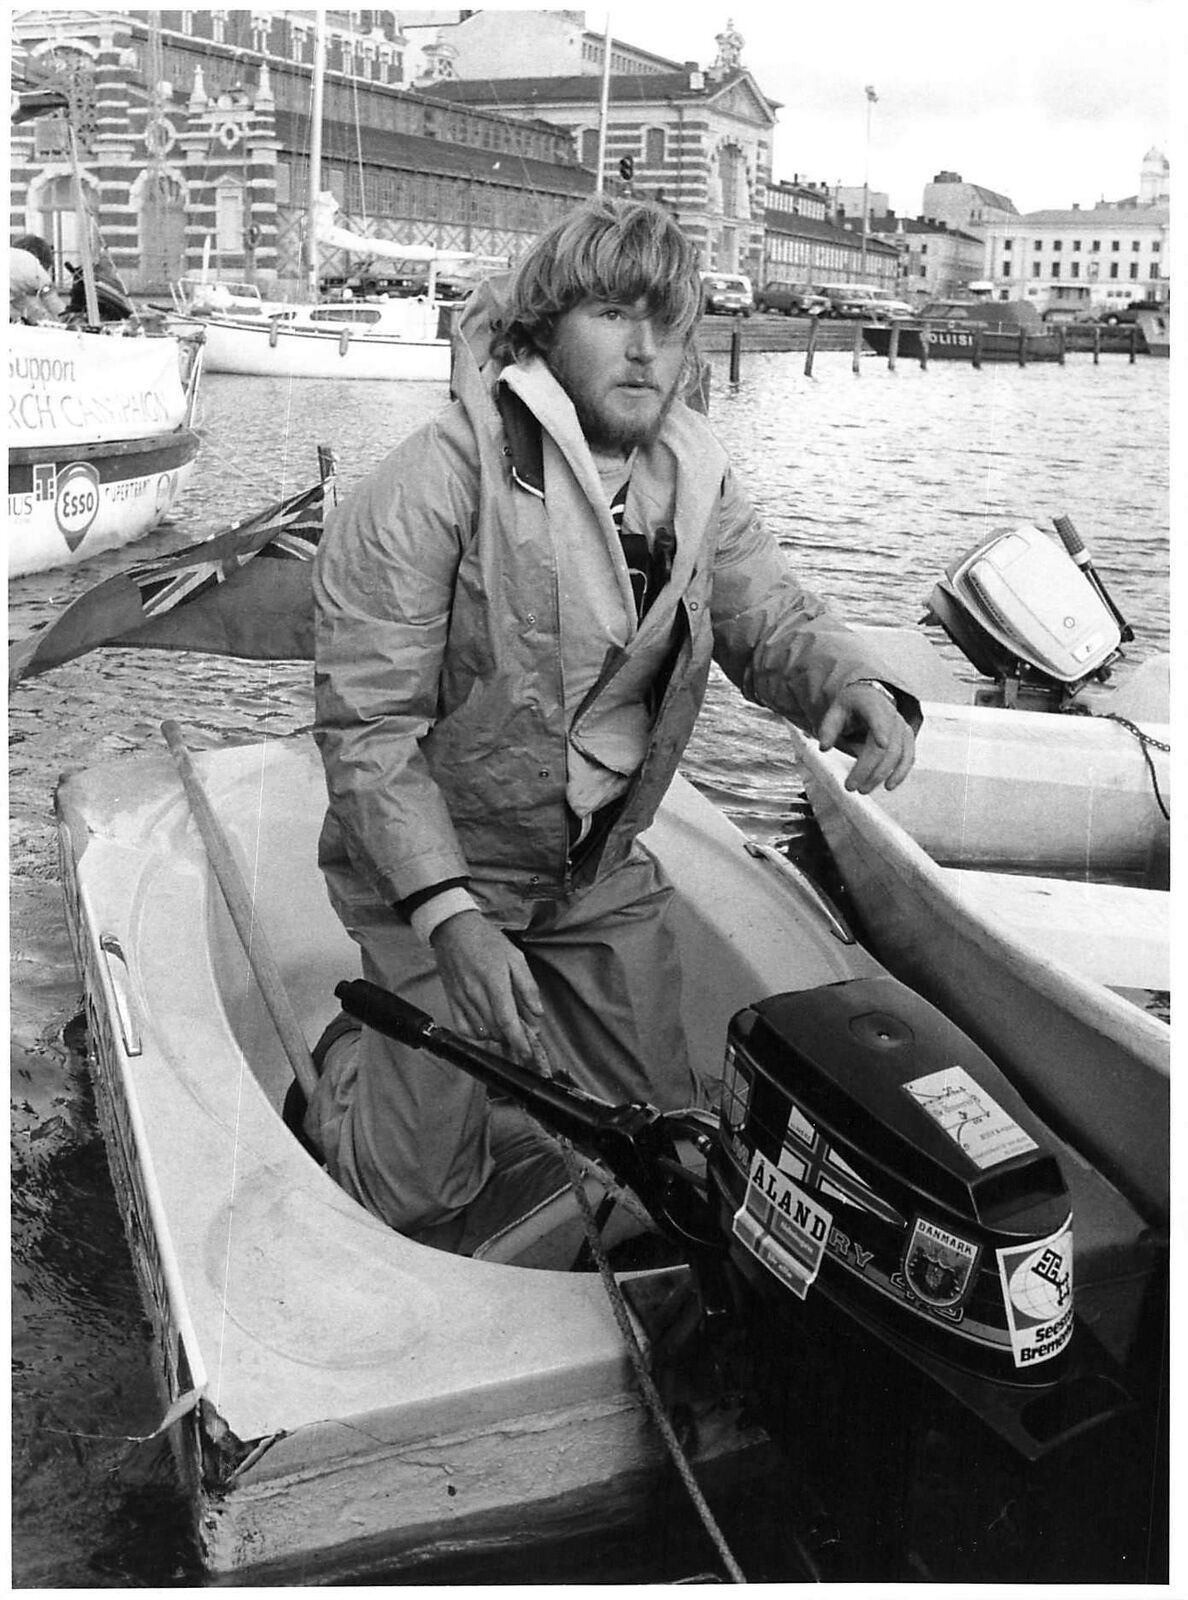 1983 Press Photo WILLIAM NEAL Motor Bath Tub Boat Sailor London to Leningrad kg